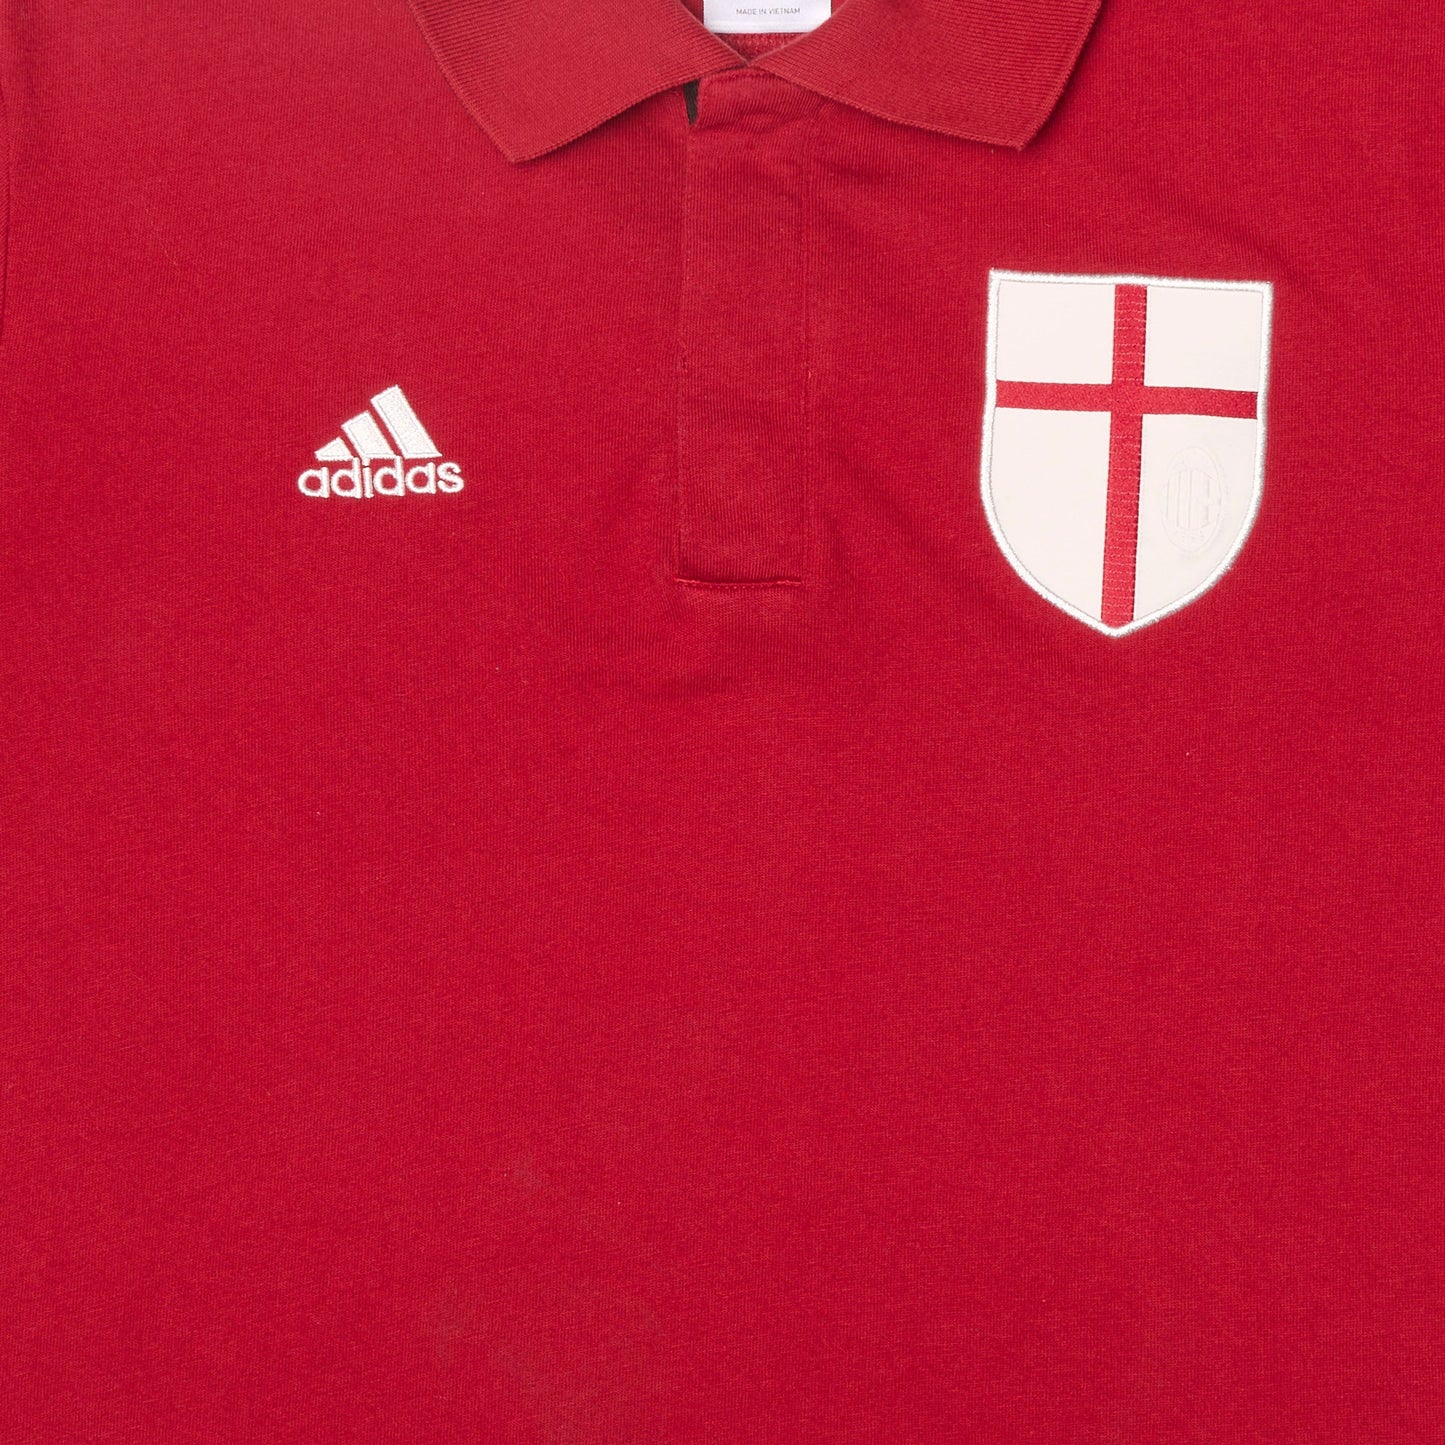 Adidas AC Milan  Collared Sports Shirt - S